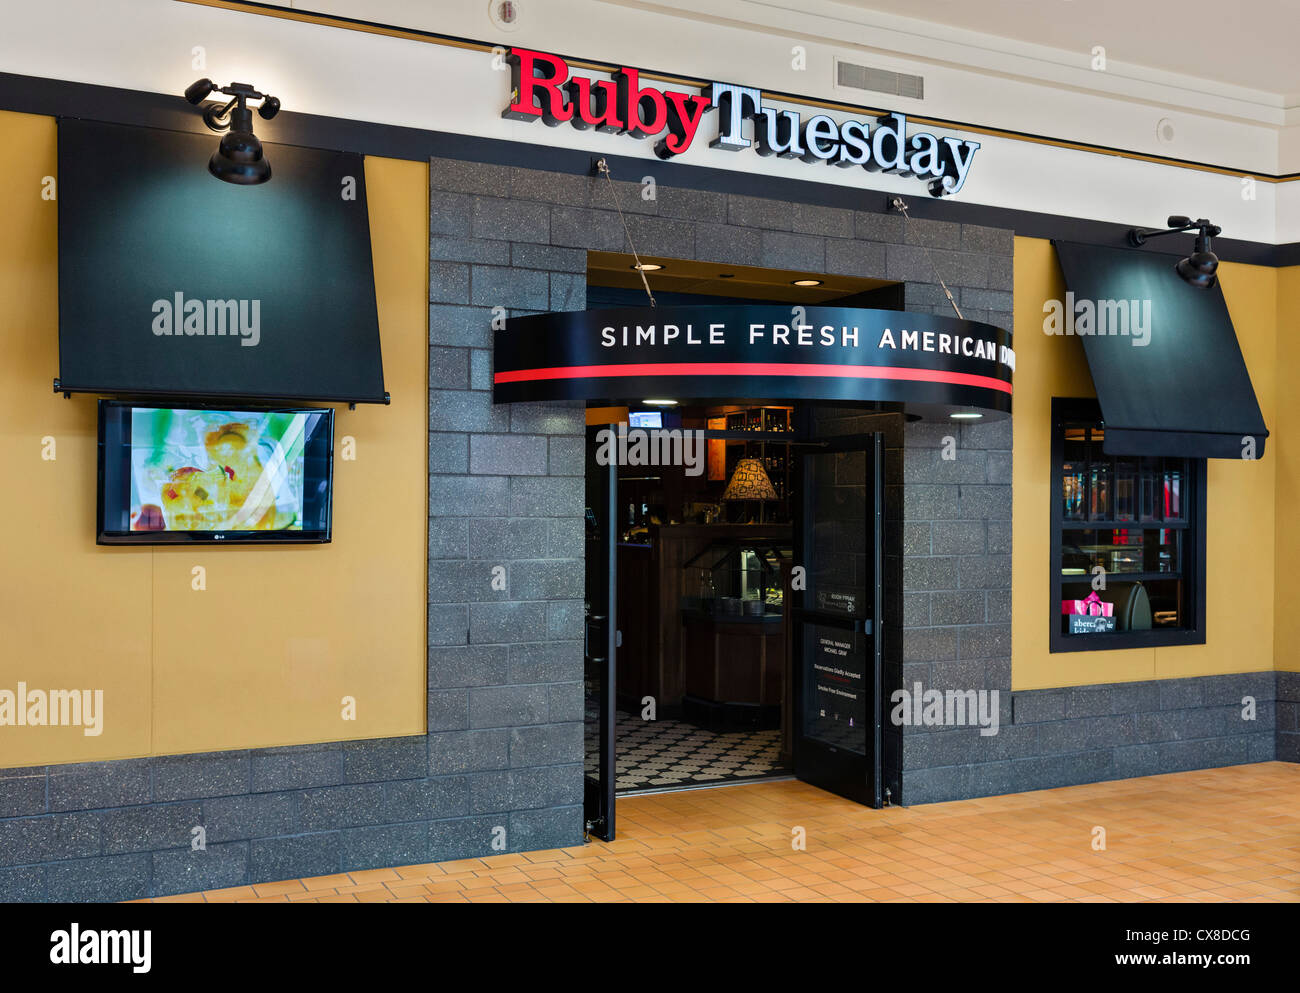 Ruby Tuesday restaurant in the Mall of America, Bloomington, Minneapolis, Minnesota, USA Stock Photo